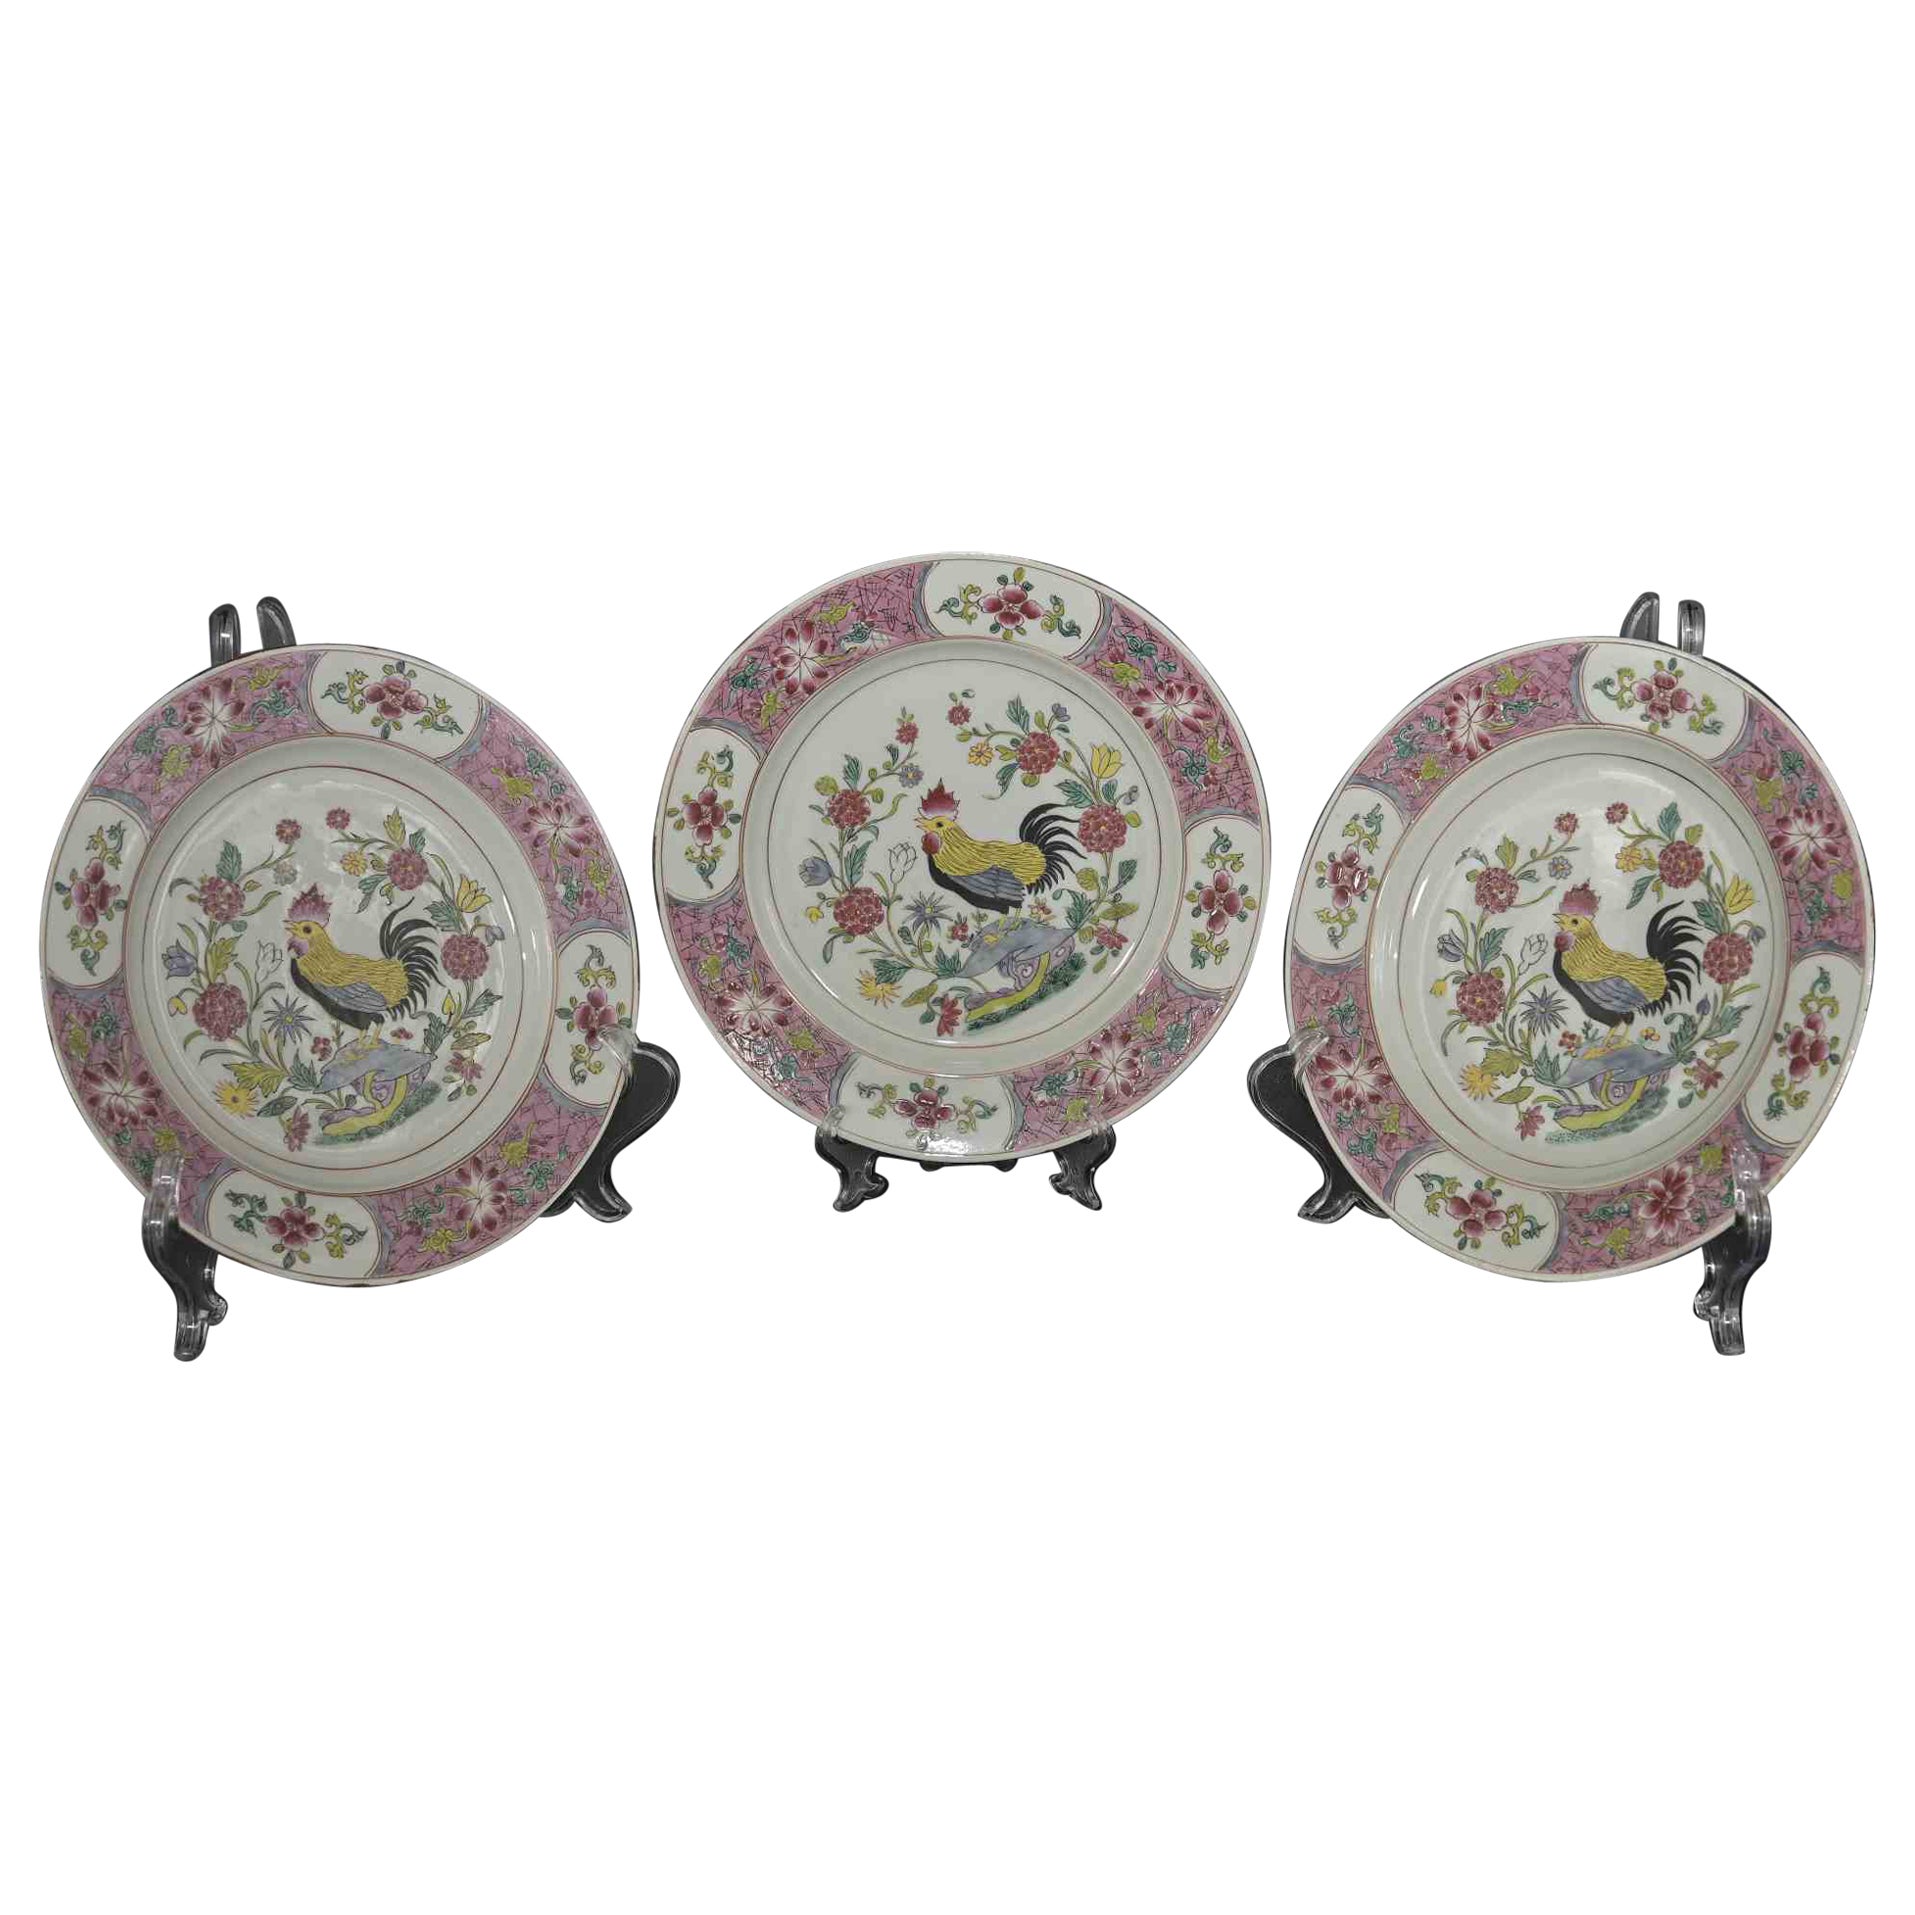 Set of 3 Chinese Ceramic Plates, Mid-20th Century